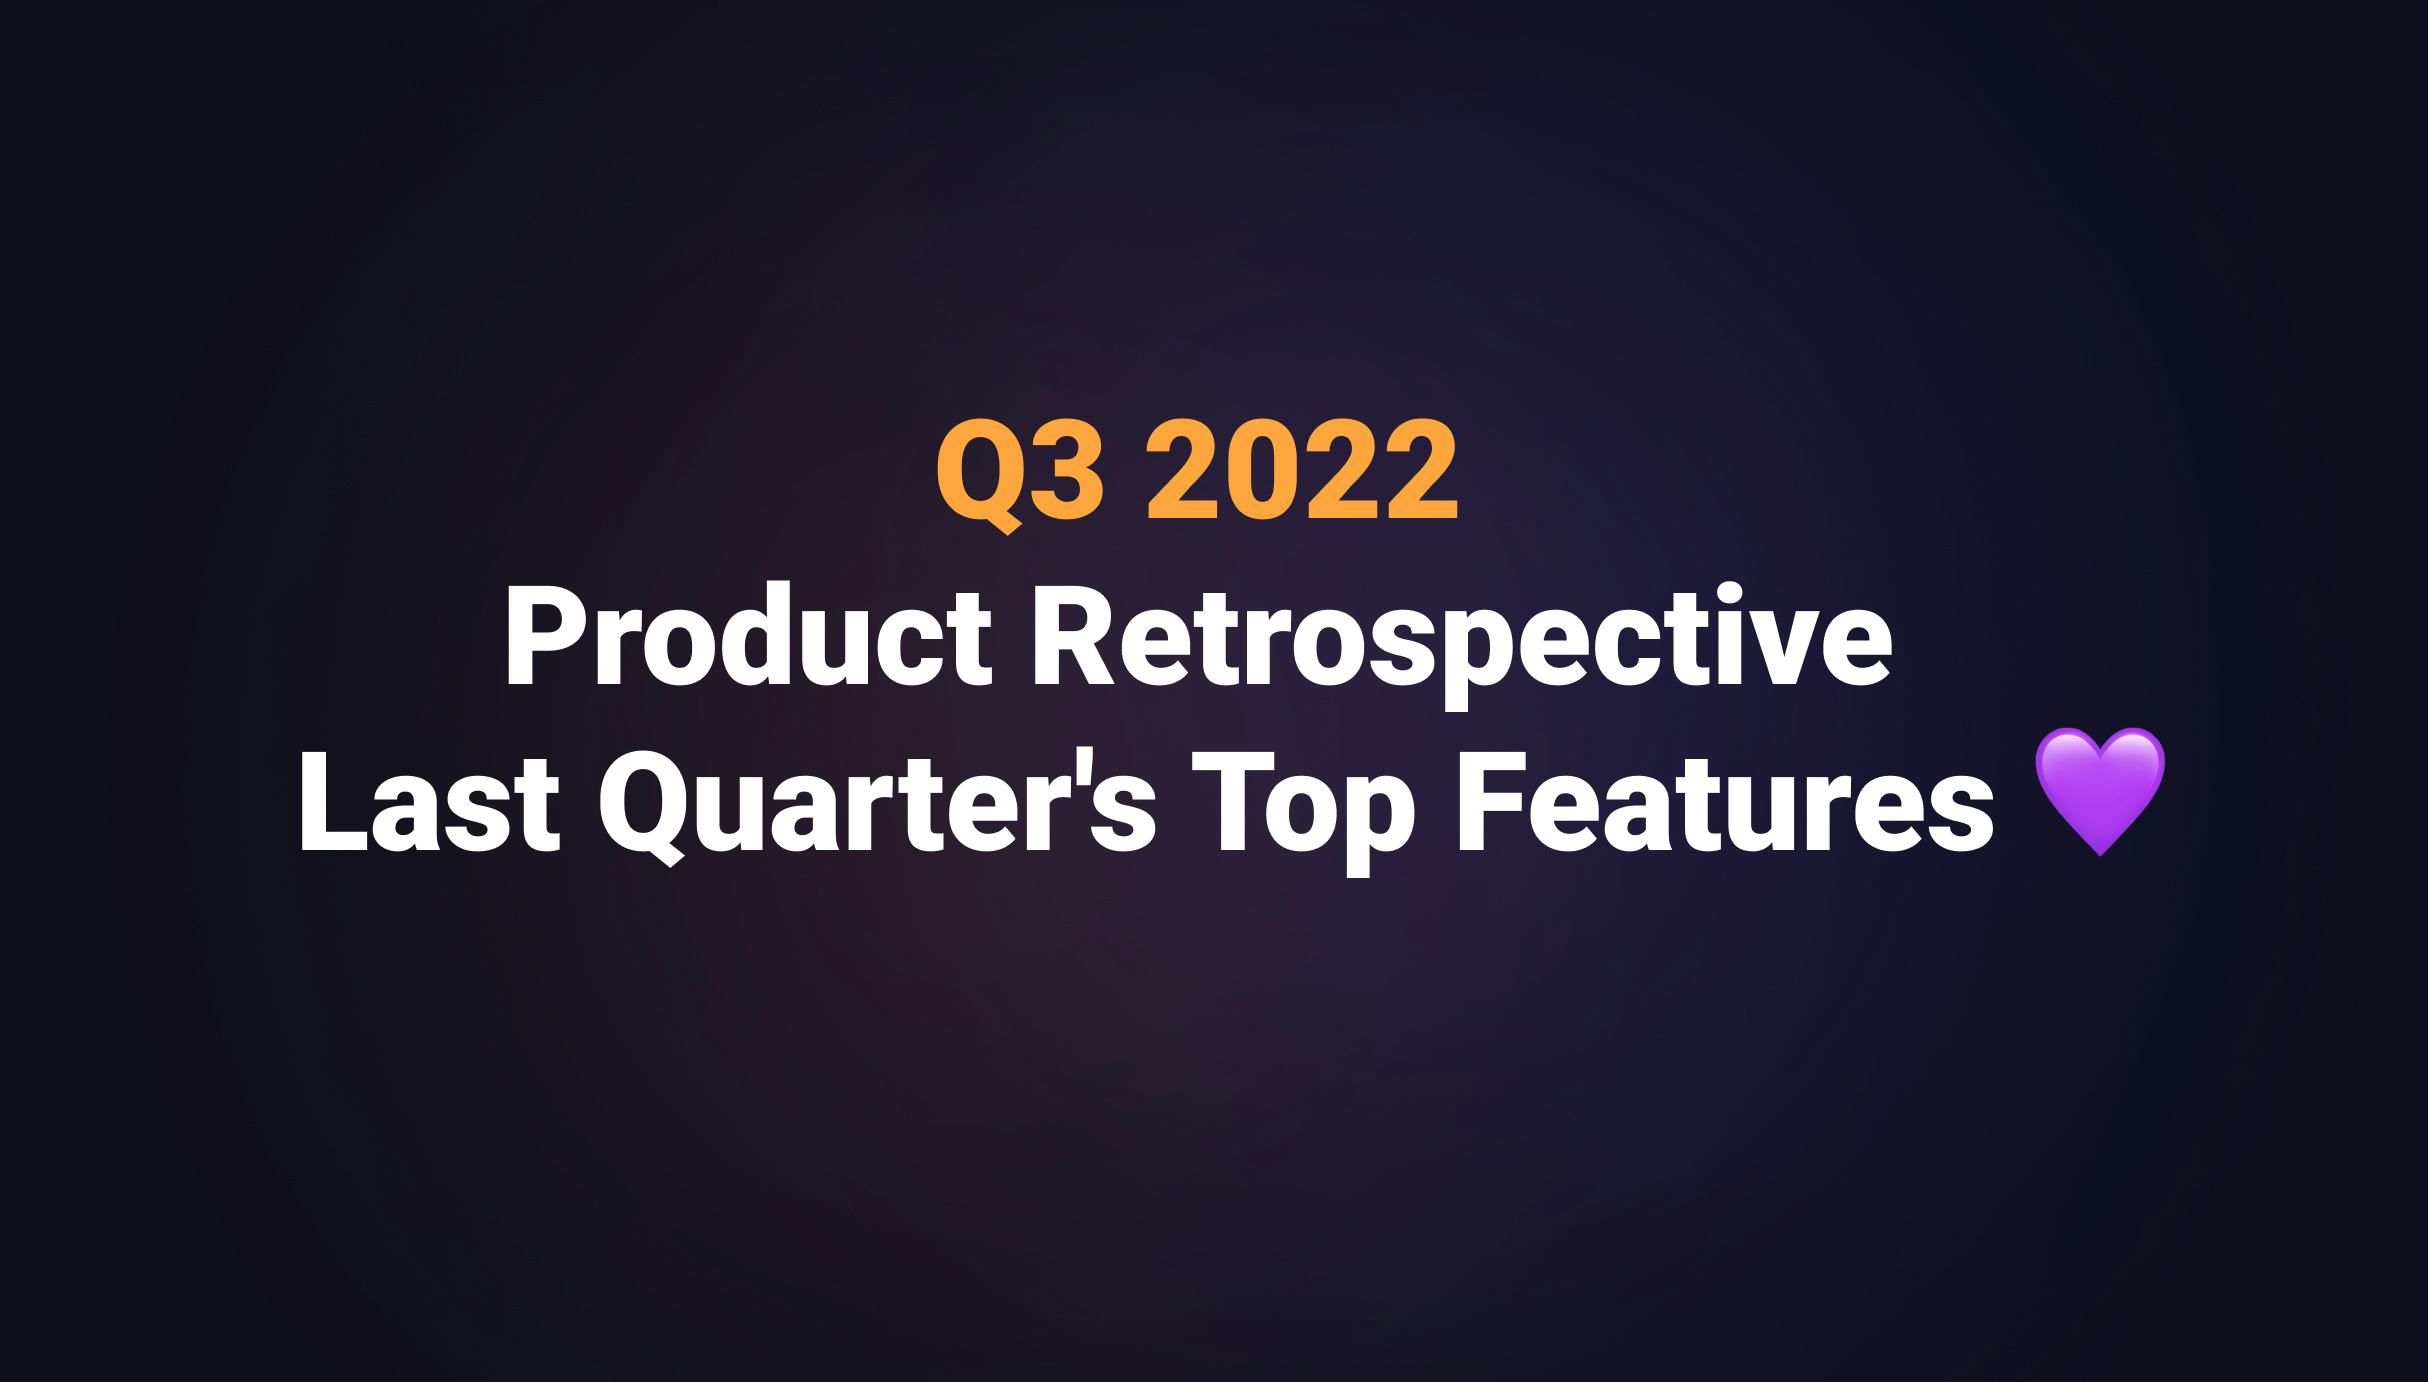 Q3 2022 product retrospective - Last quarter's top features